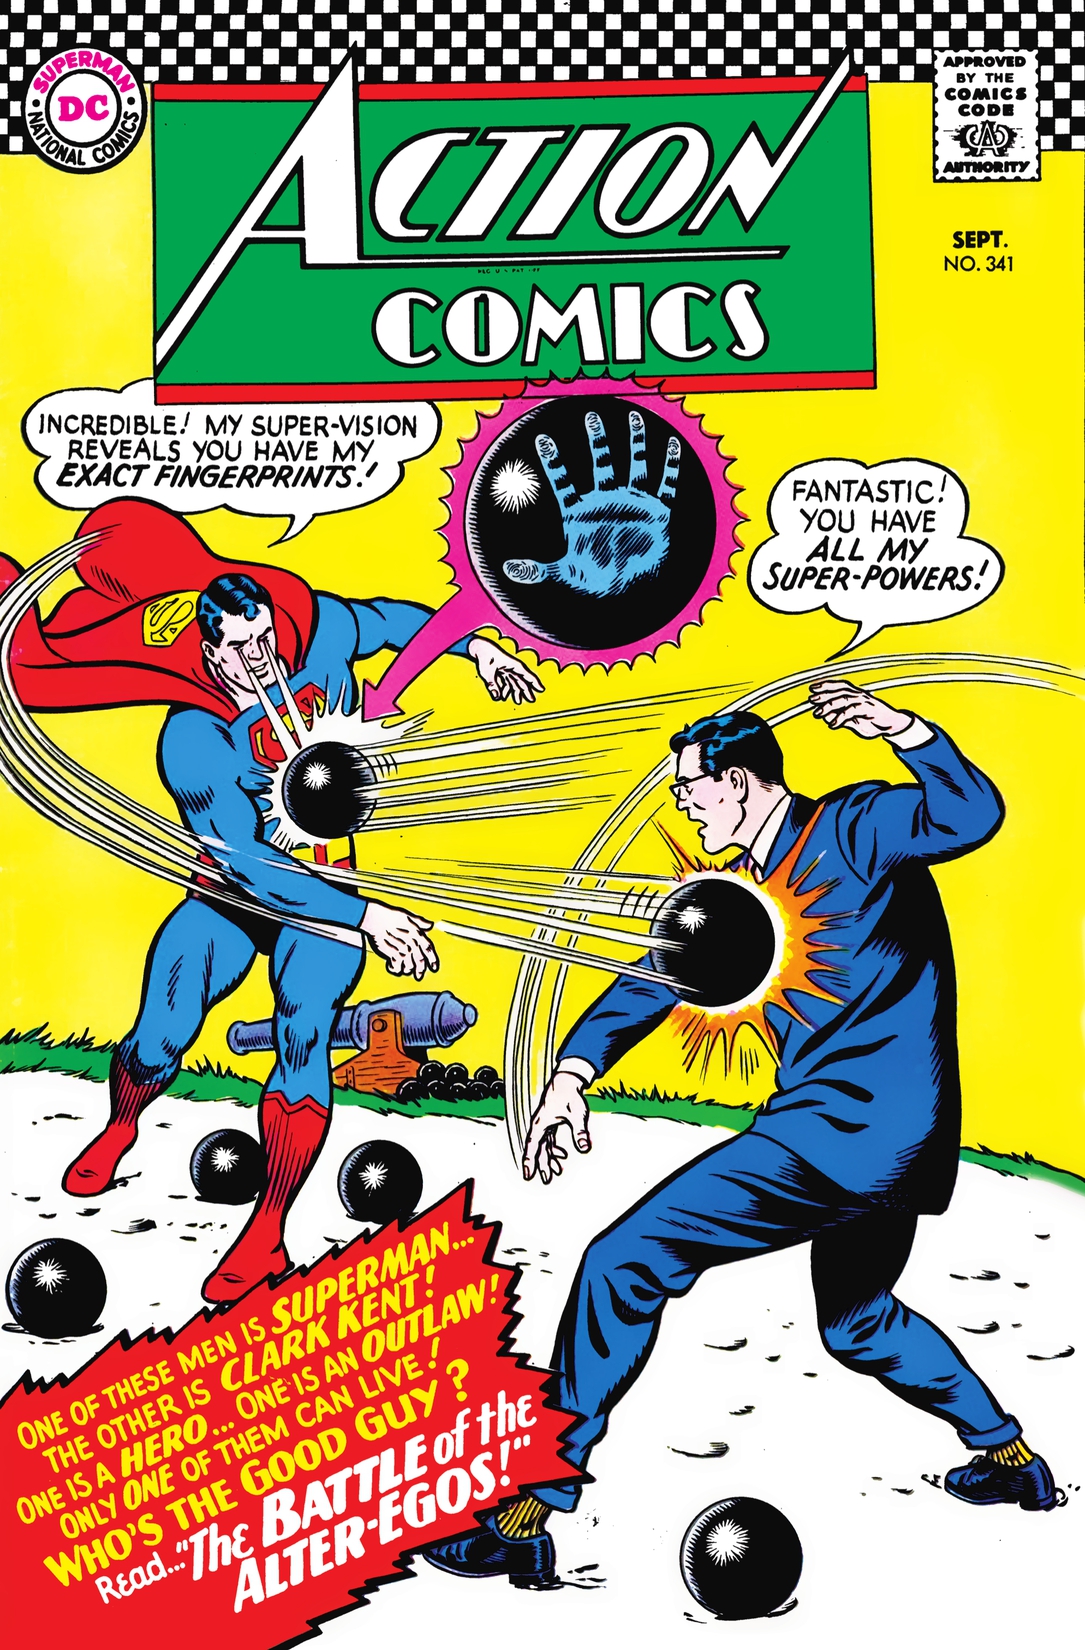 Action Comics (1938-2011) #341 preview images